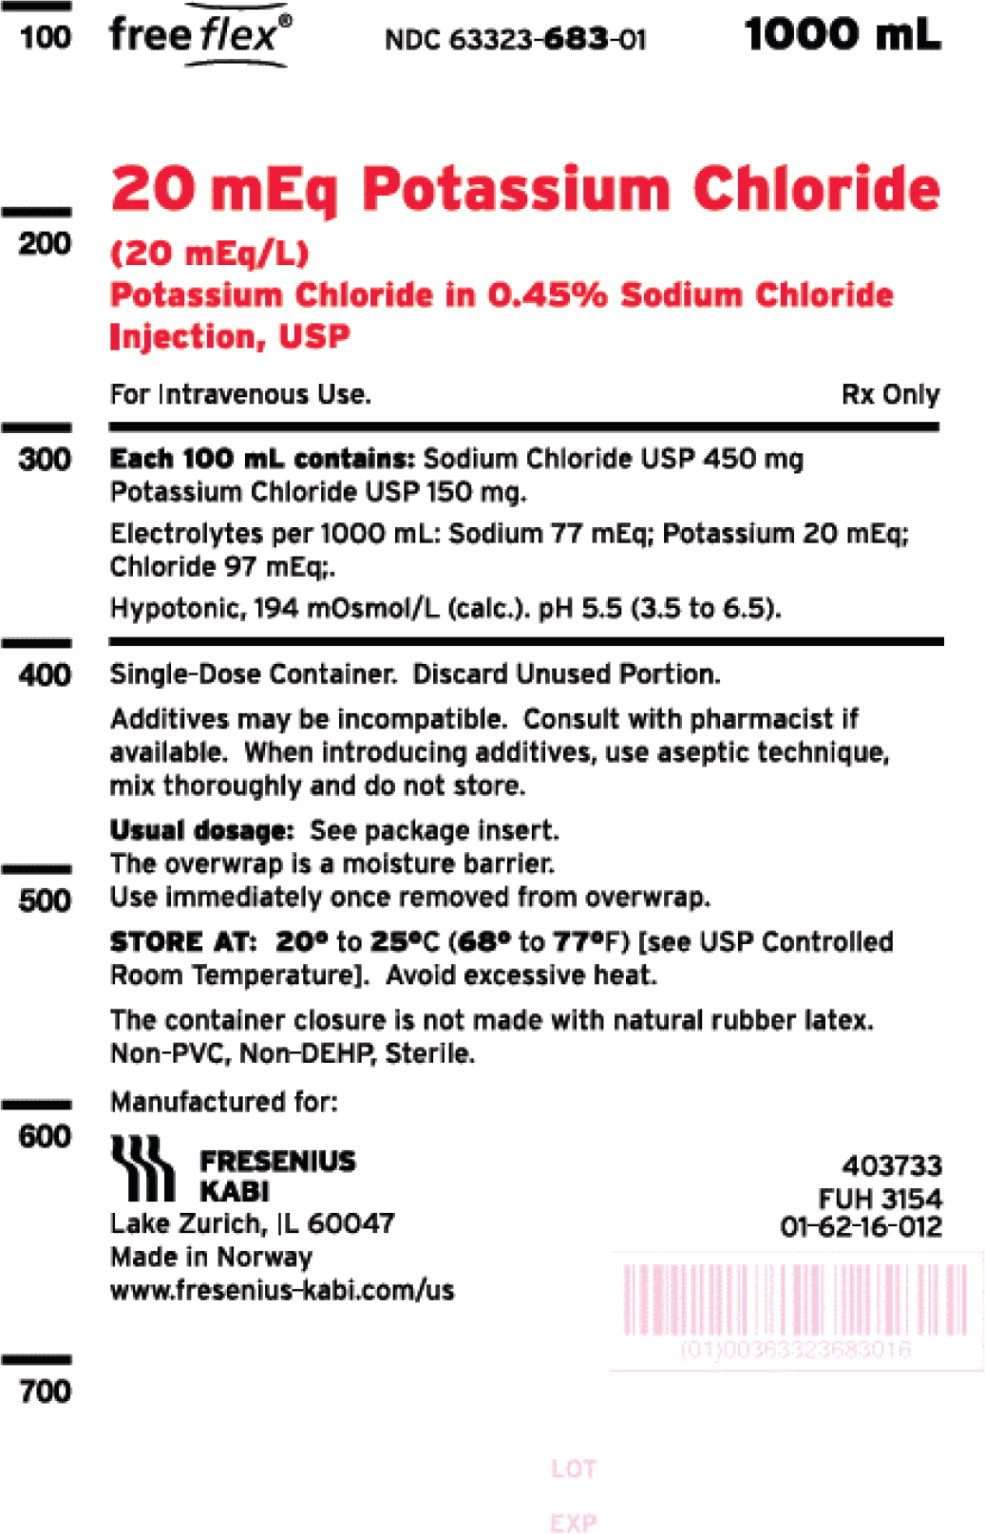 PACKAGE LABEL - PRINCIPAL DISPLAY – Potassium Chloride in 0.45% Sodium Chloride Injection, USP Bag Label
